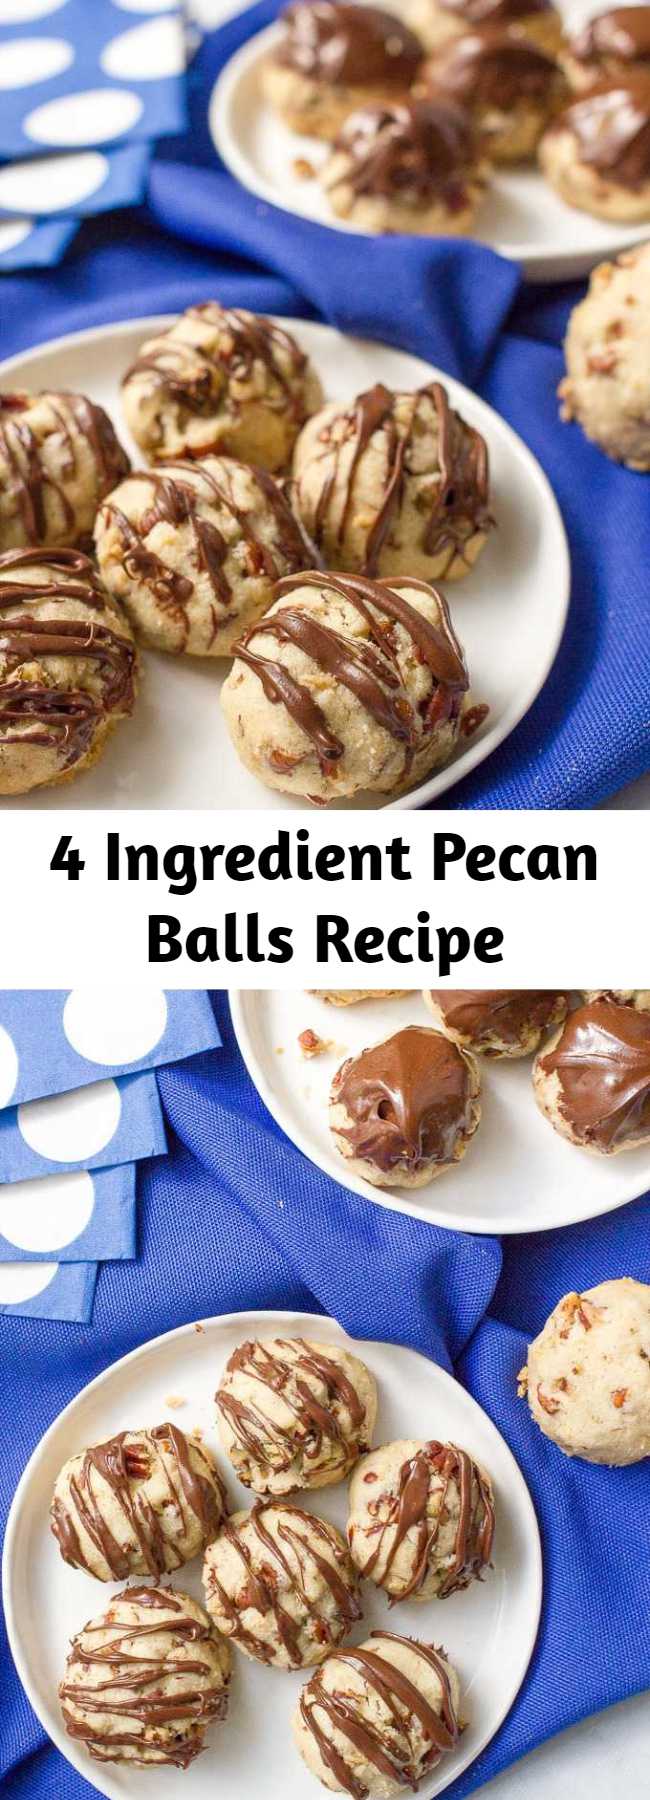 4 Ingredient Pecan Balls Recipe - Easy 4-ingredient pecan balls make a great game day snack, appetizer or anytime treat!